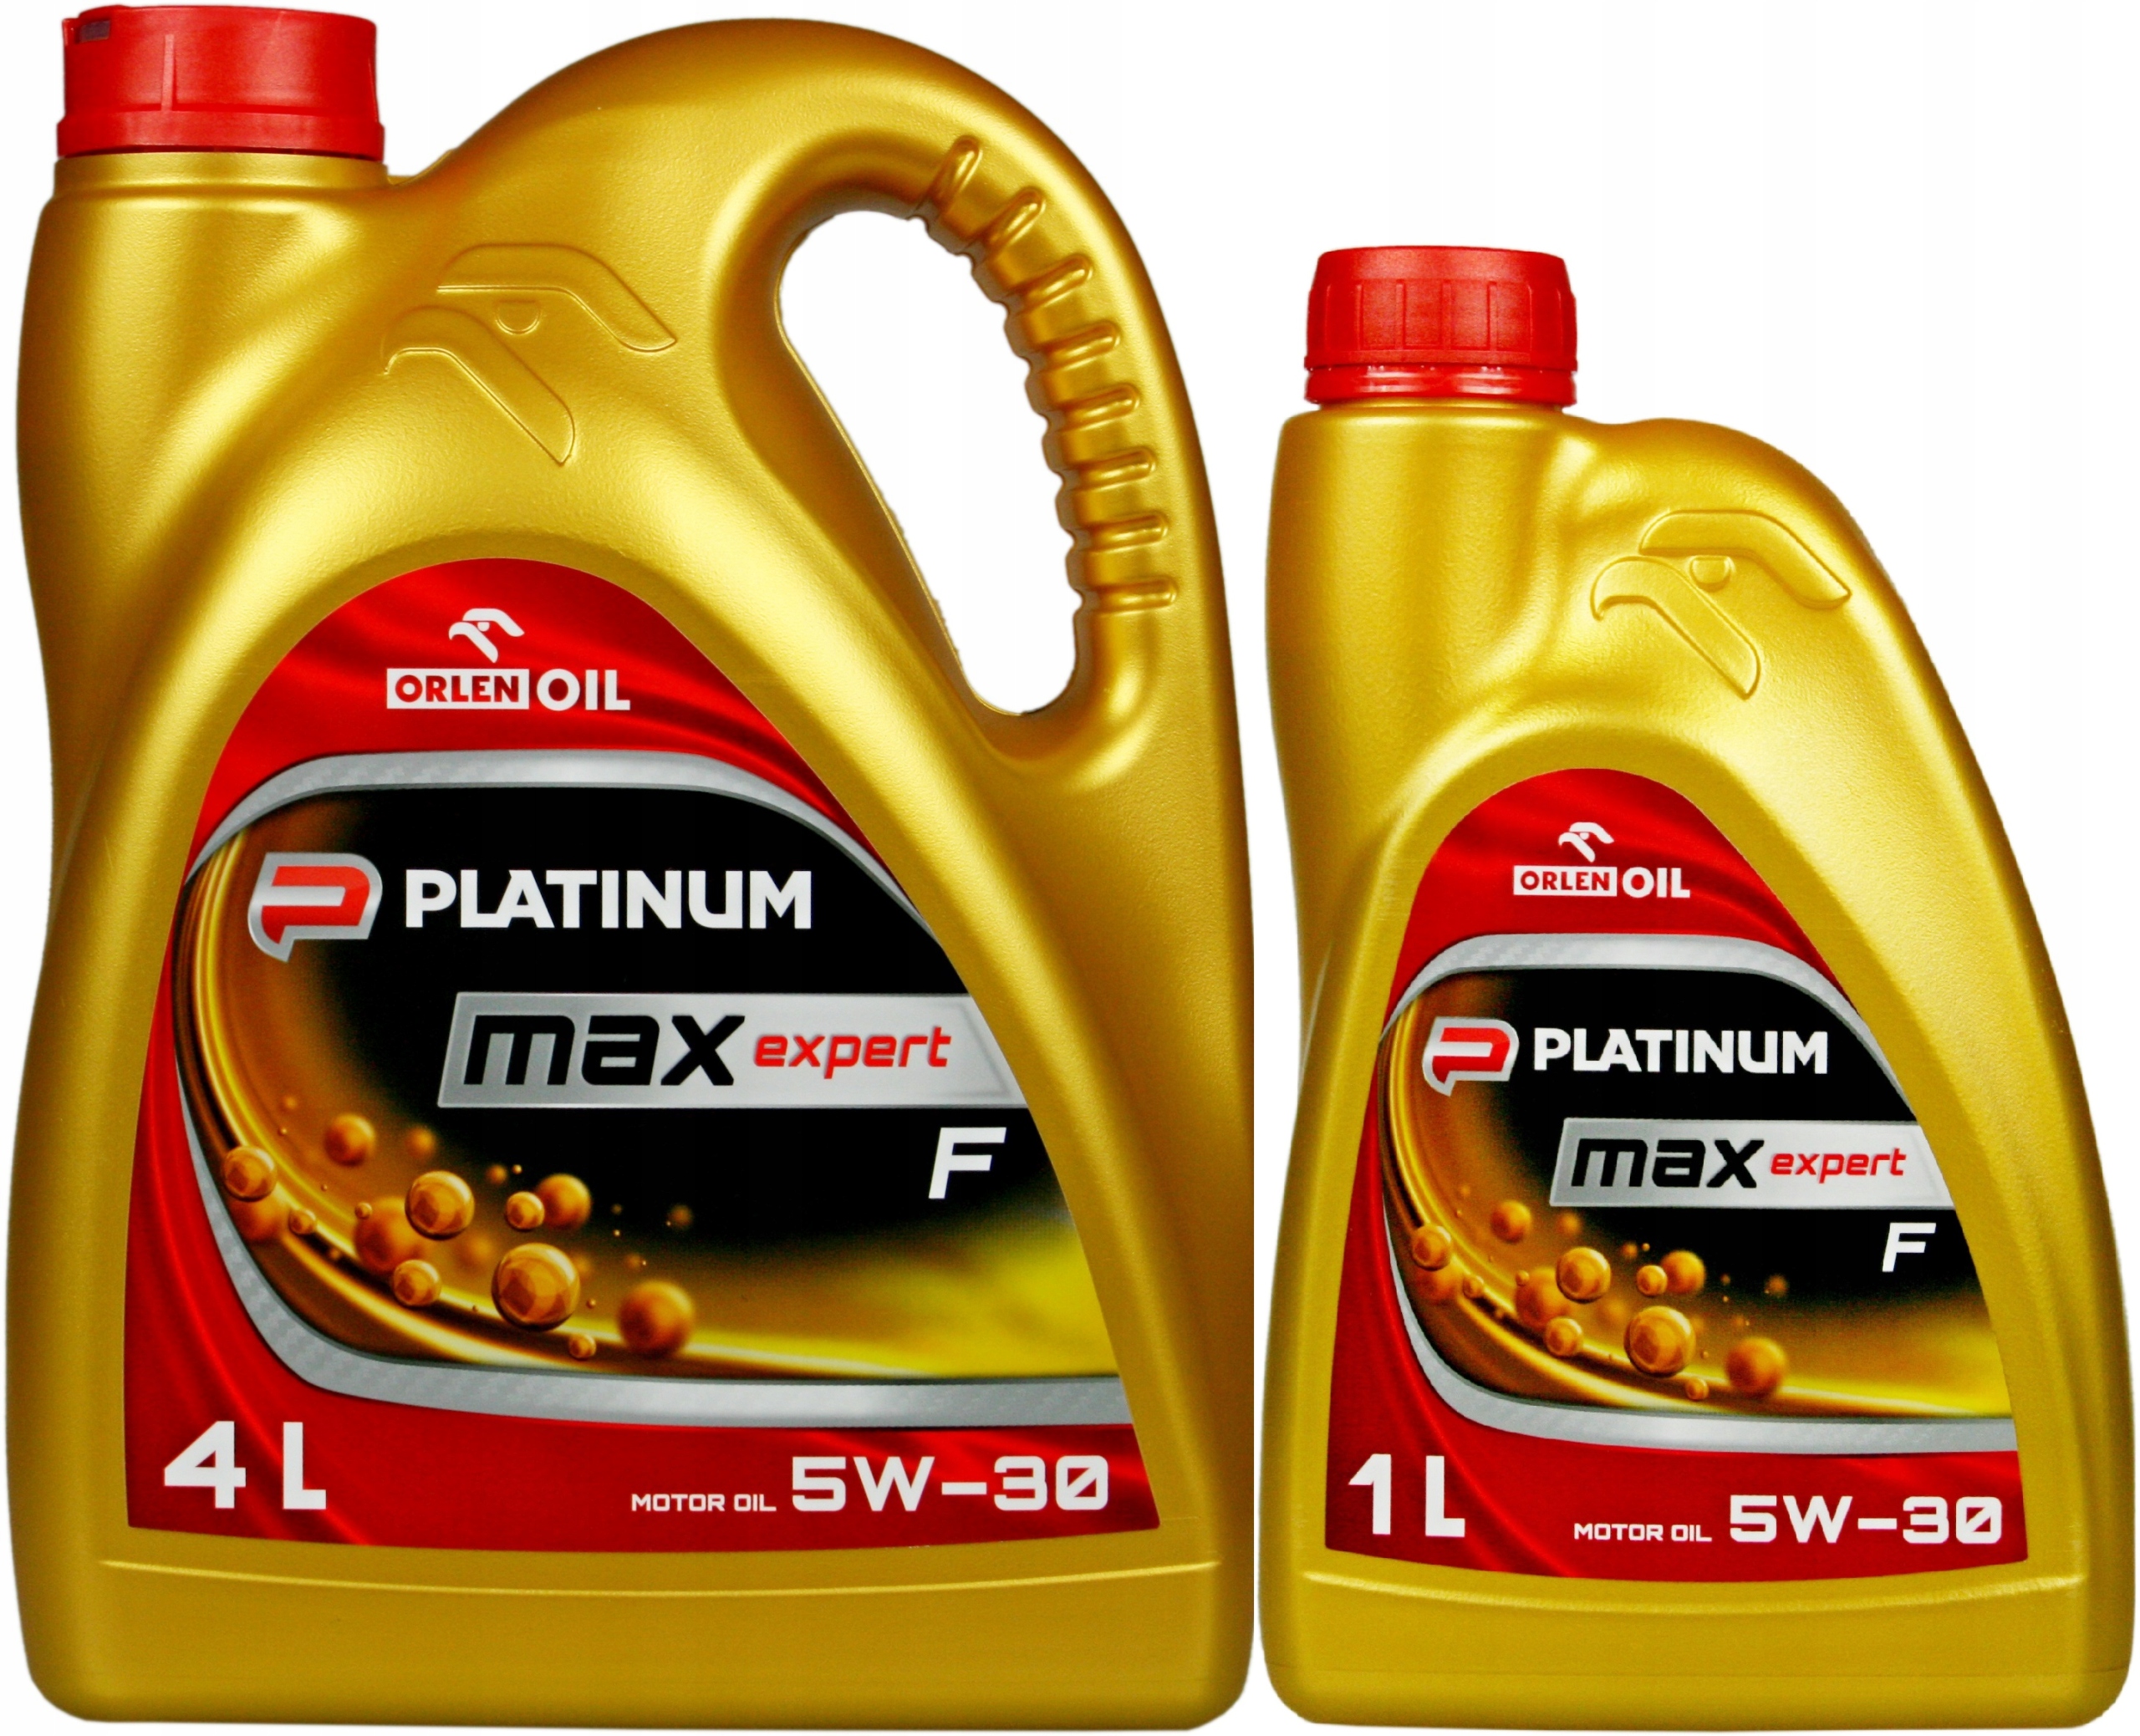 Масло за 5 минут. Orlen Oil Platinum MAXEXPERT F 5w-30. Orlen Oil XD 5w-30. Platinum 5.30 maslo. Orlen Oil Platinum XD 5w-30.